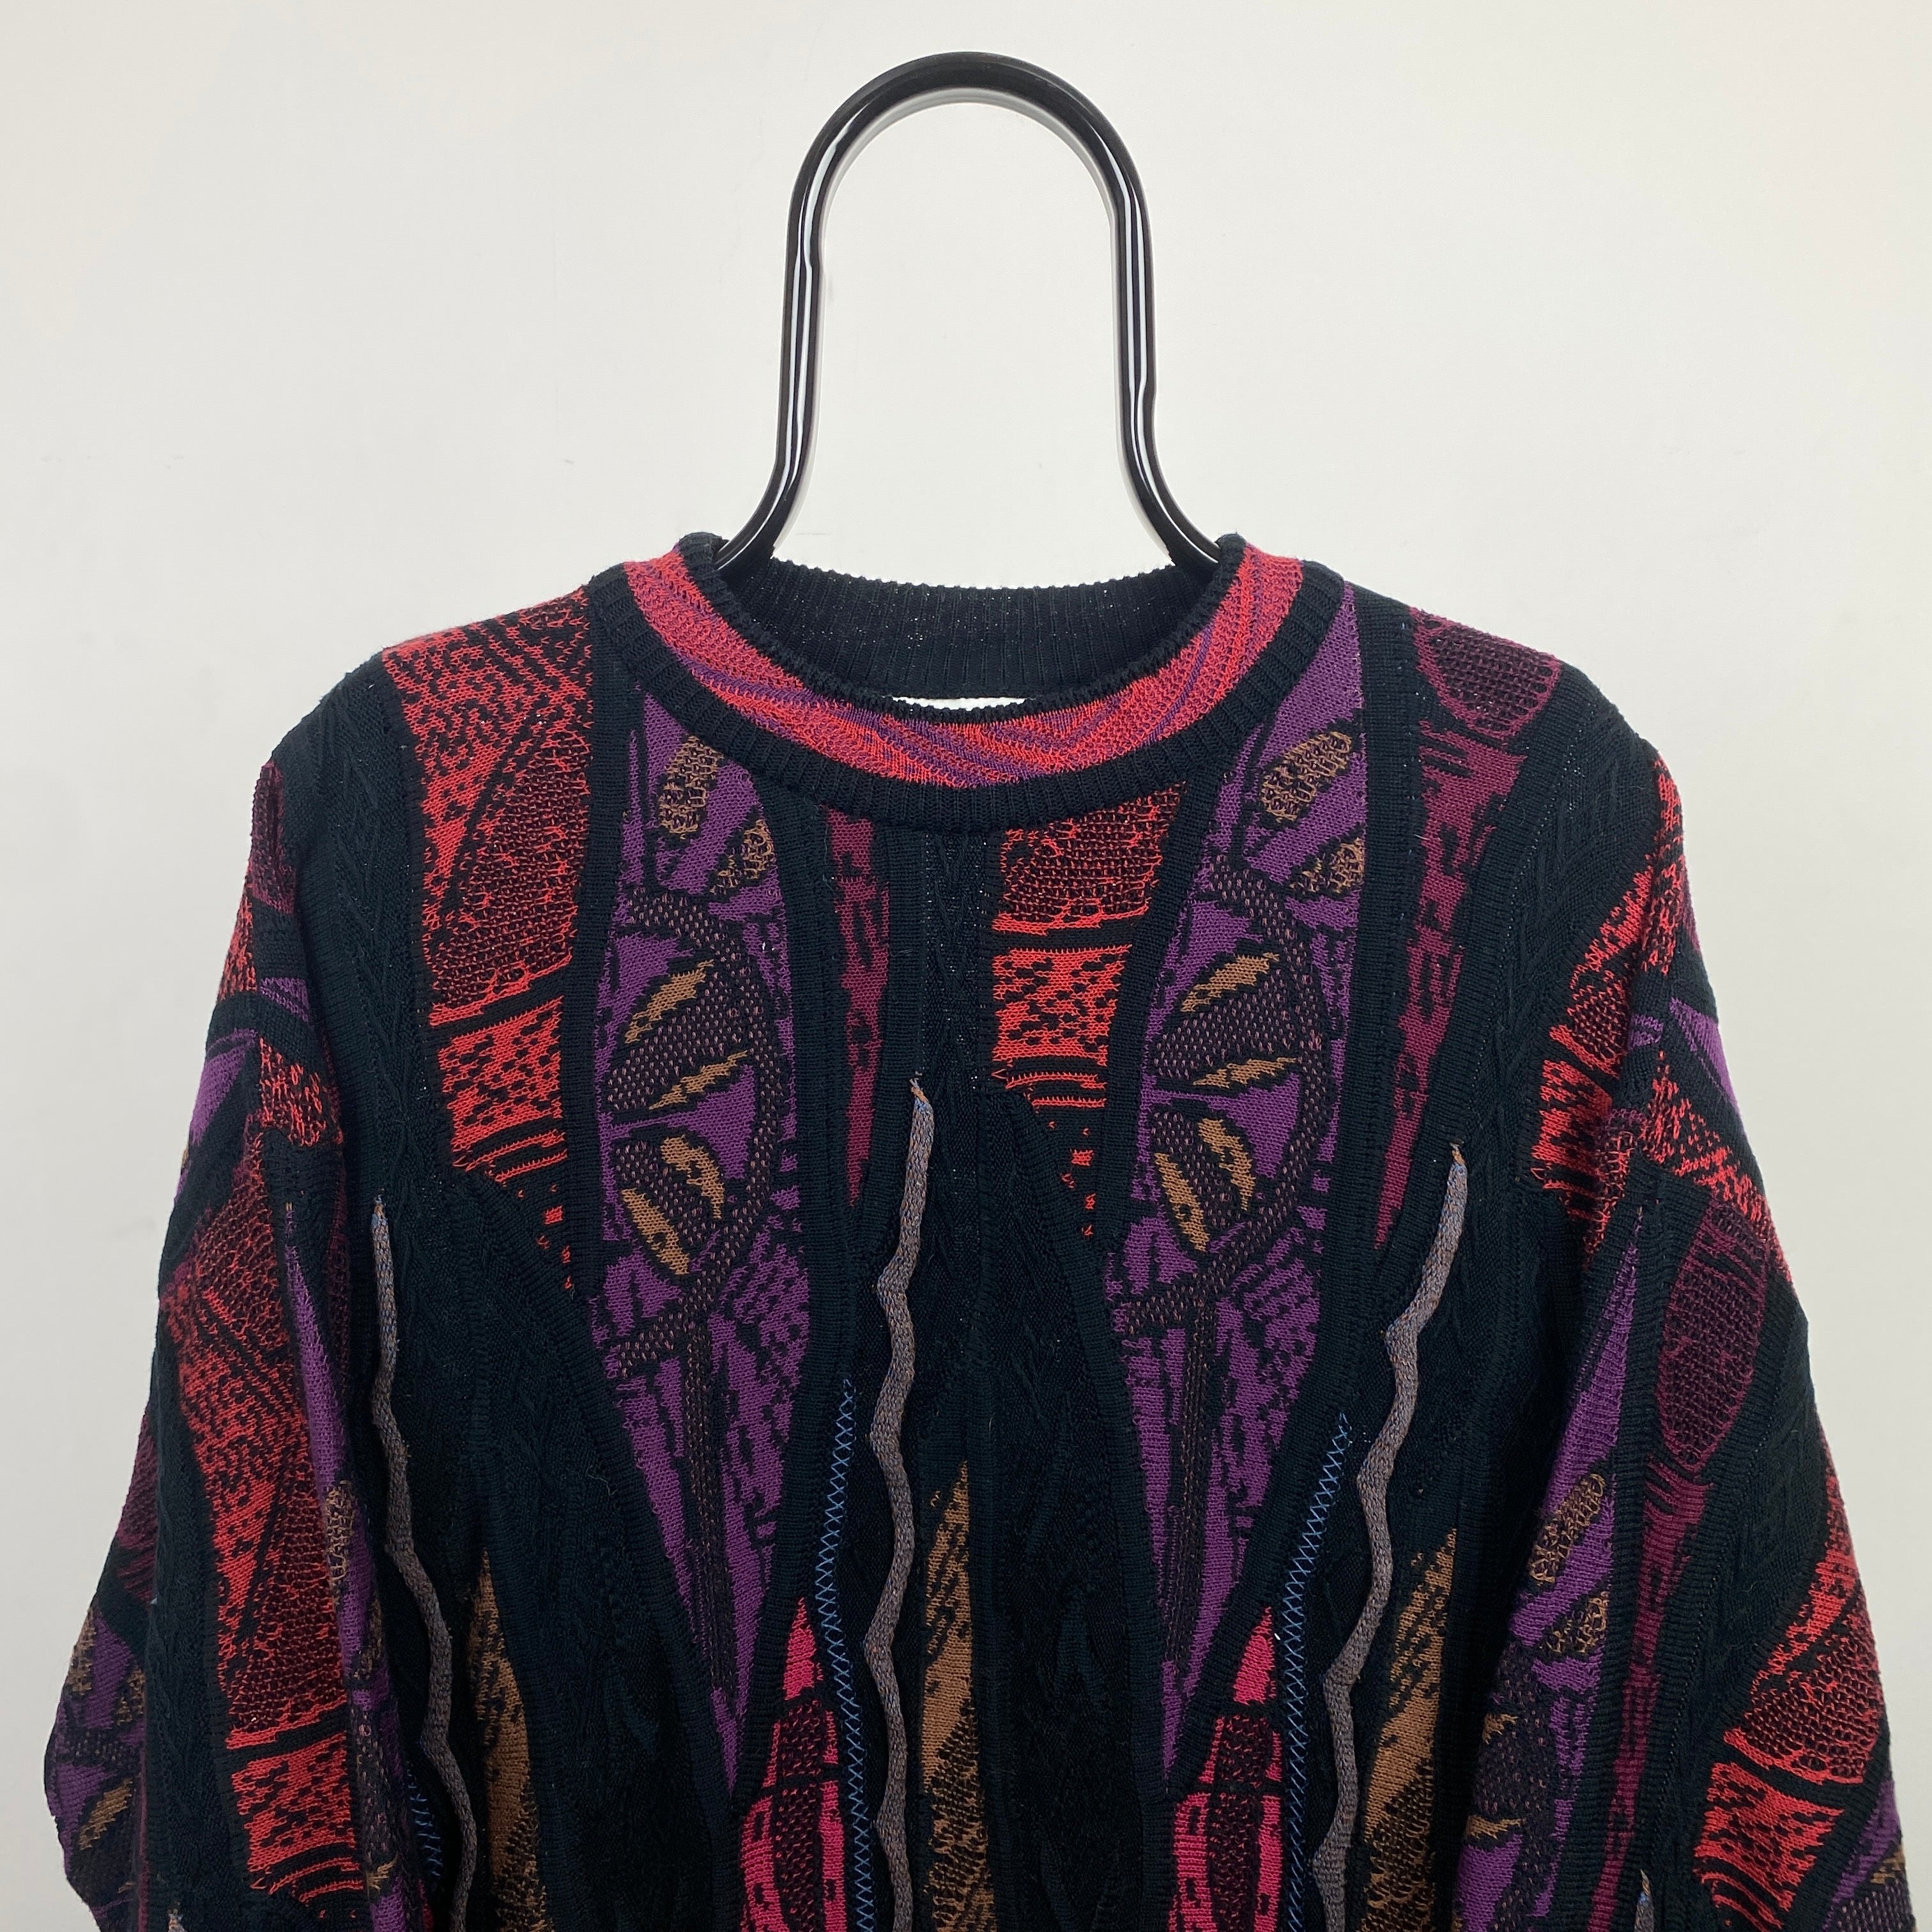 Retro Textured Knit Sweatshirt Black Large